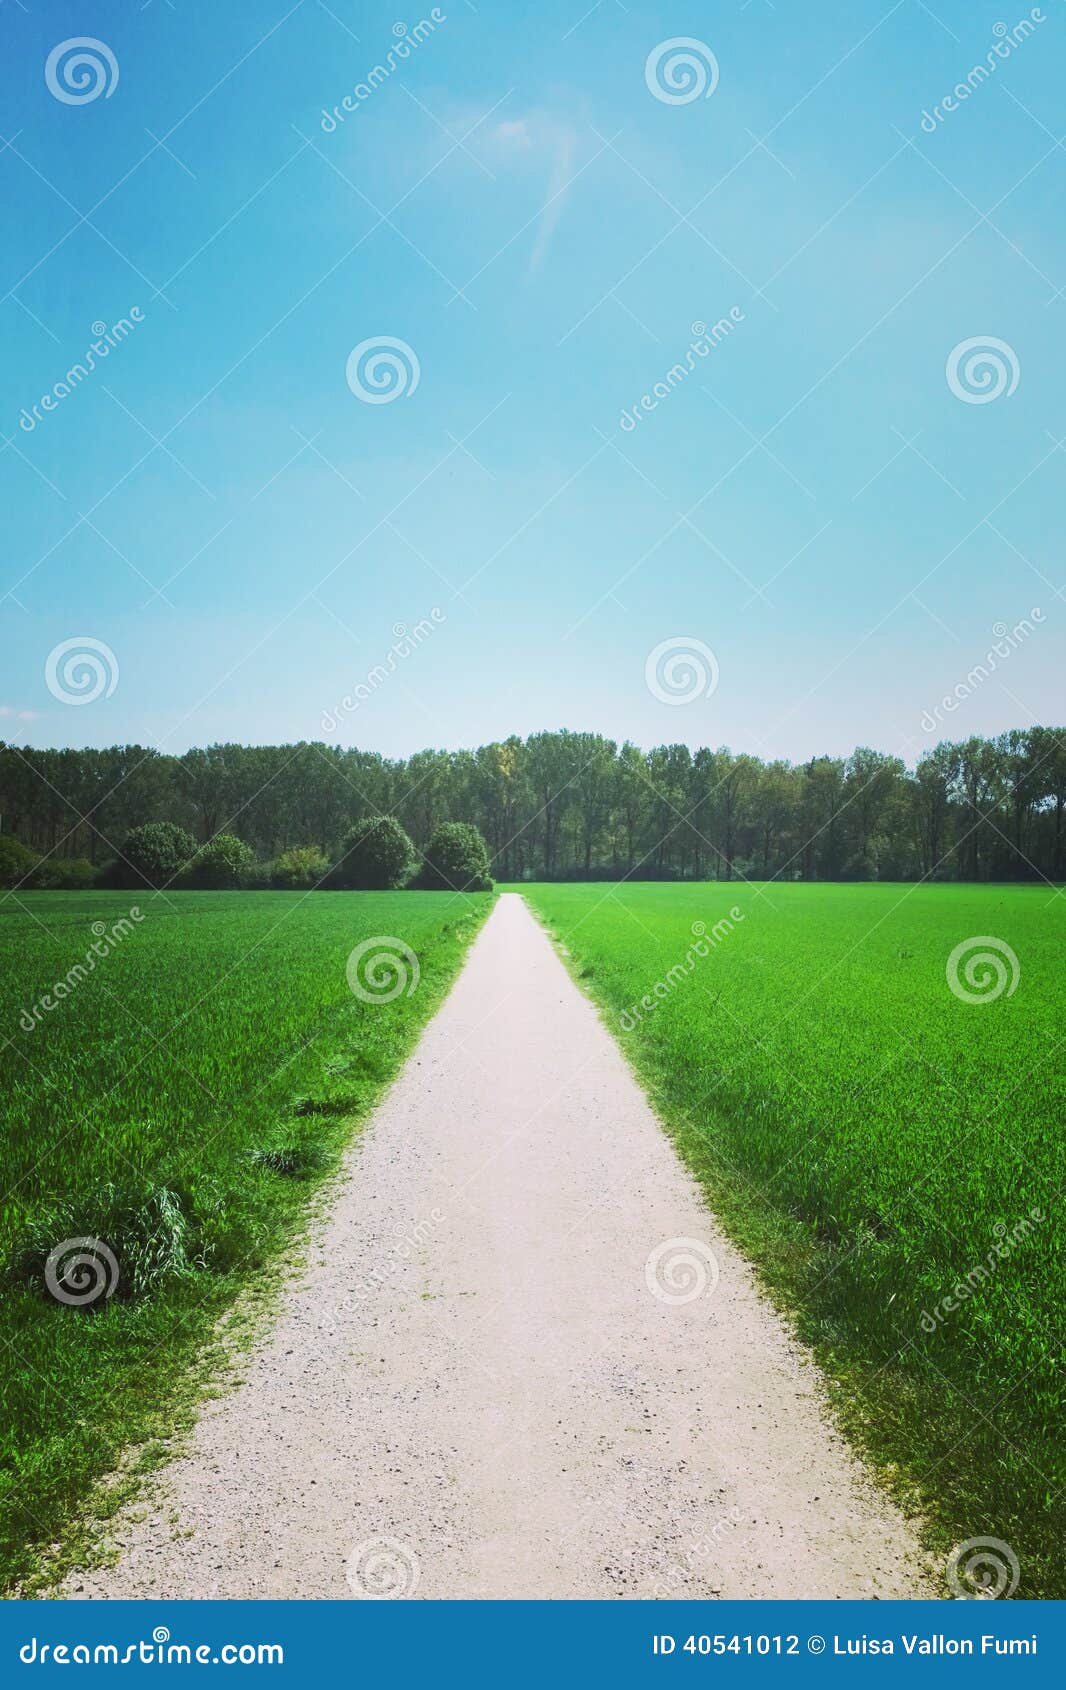 the straight path